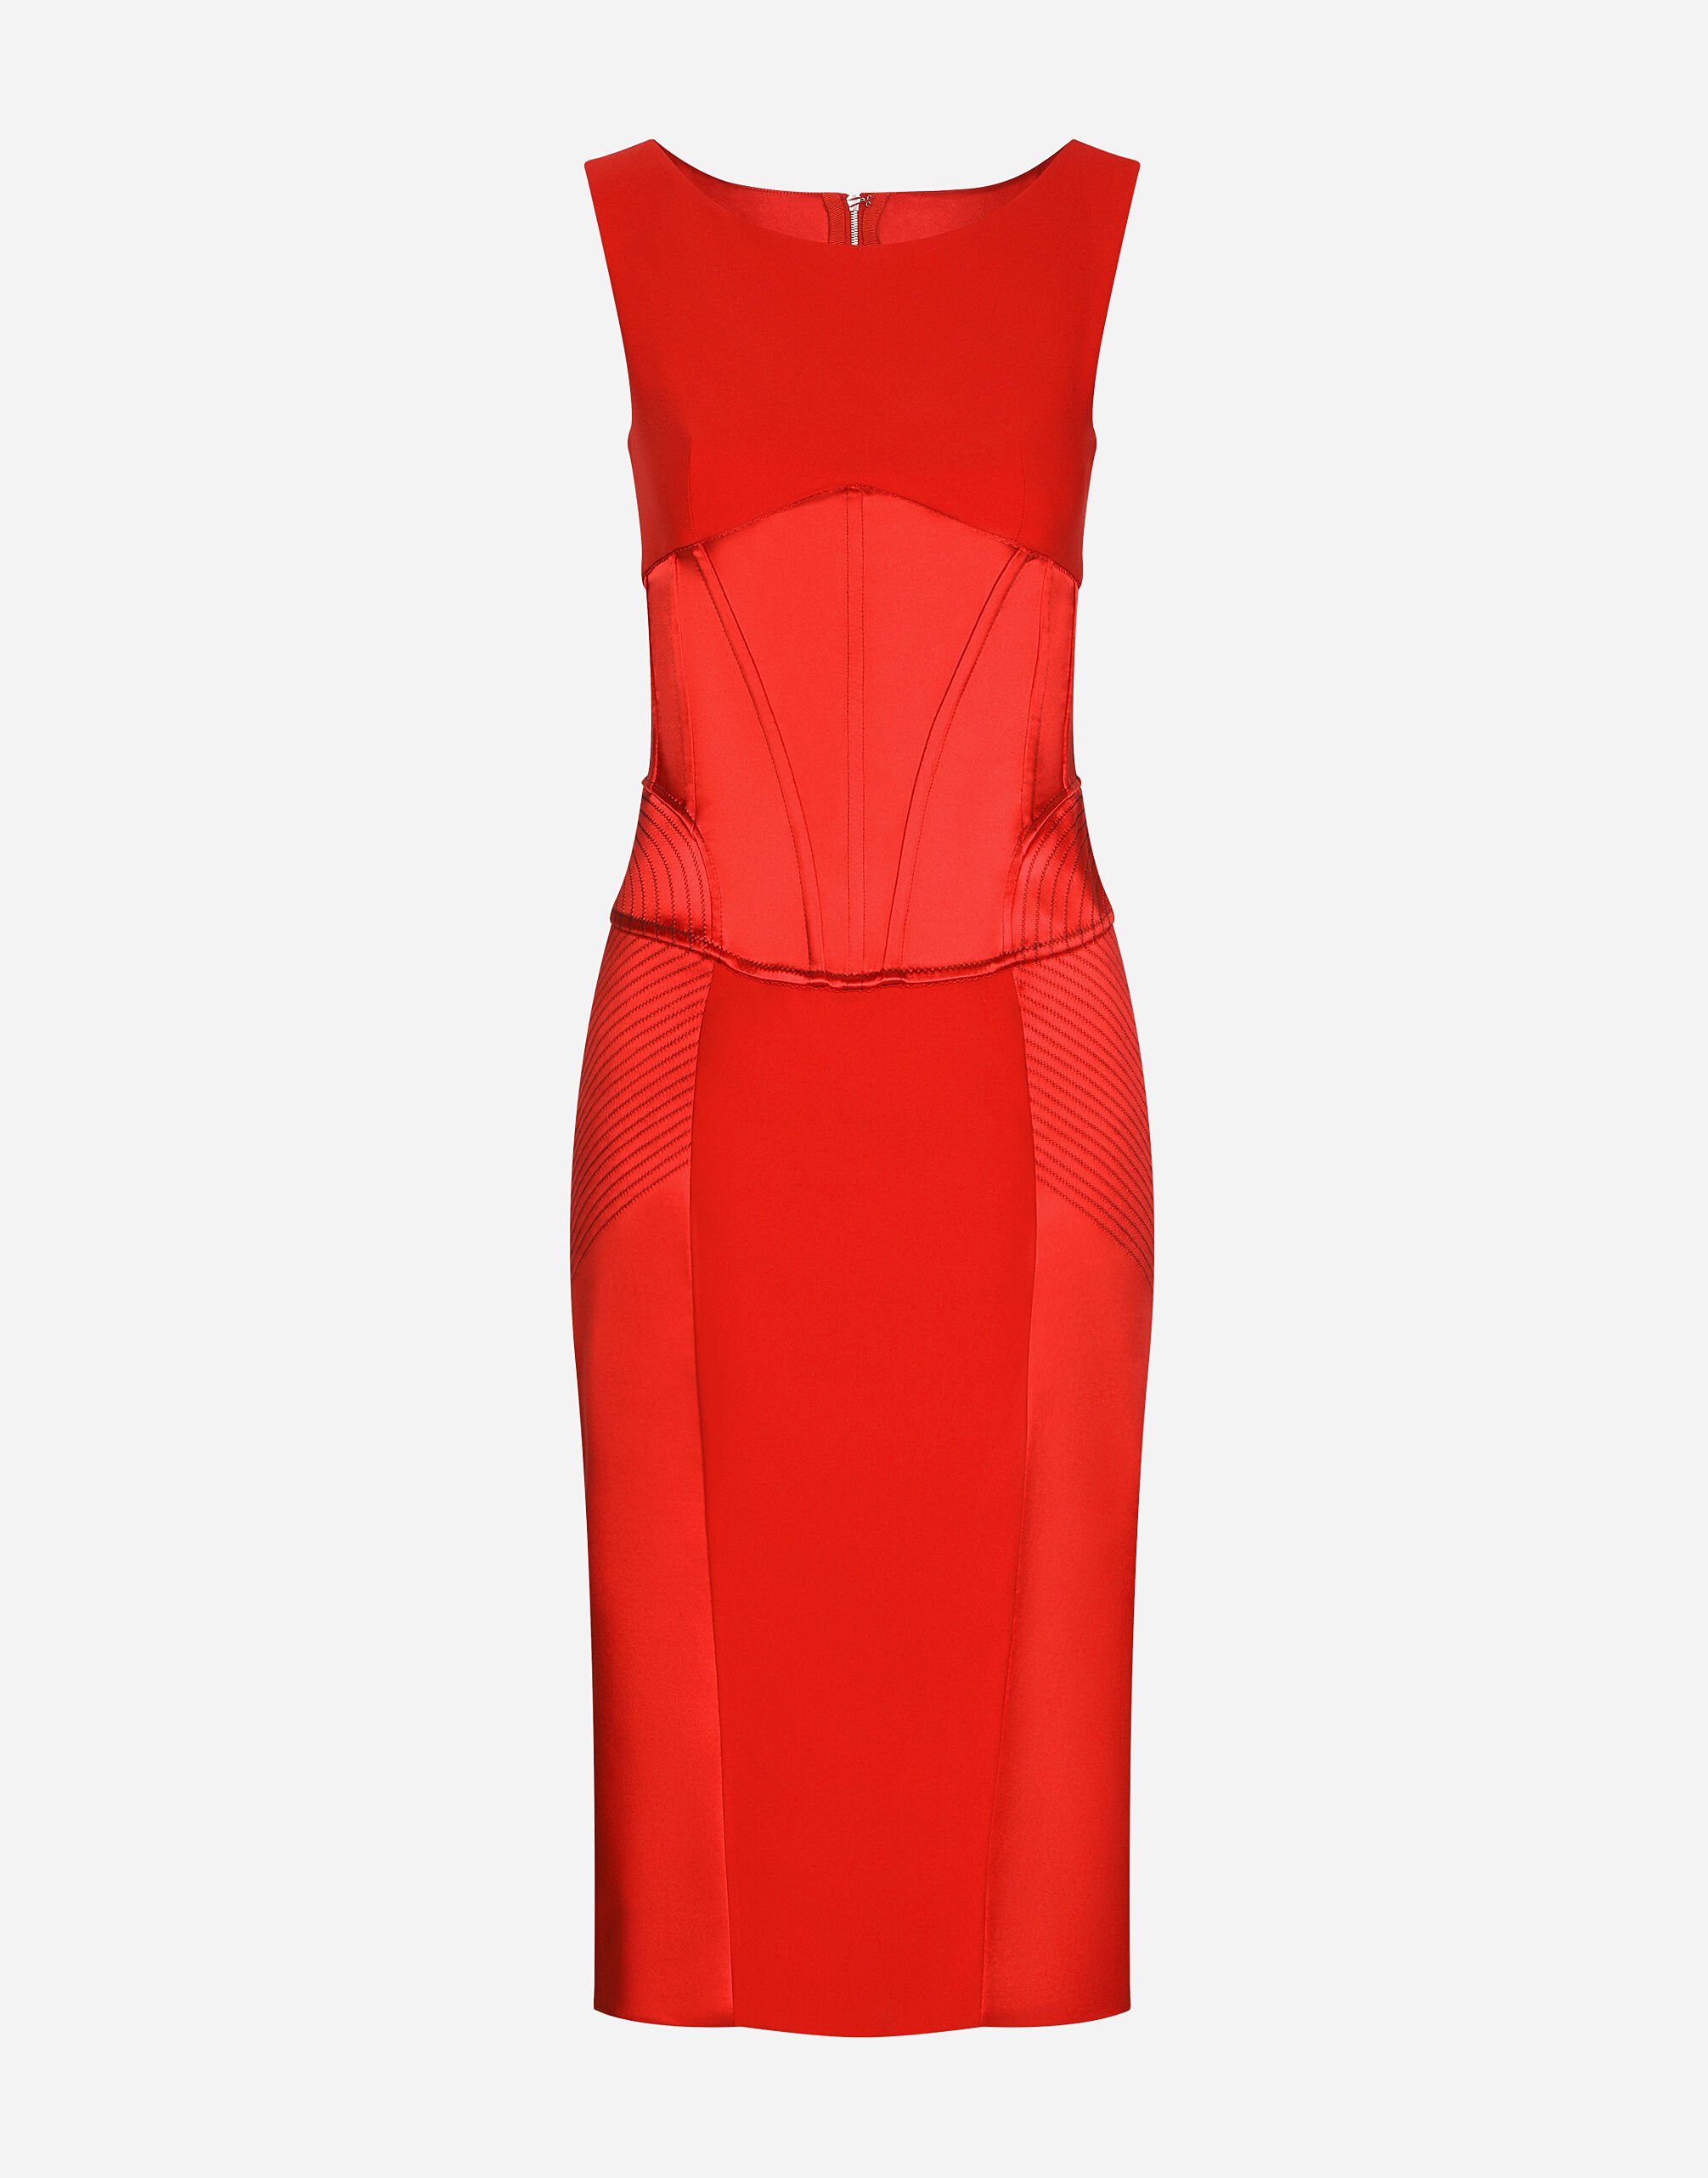 Dolce&Gabbana Satin and cady calf-length dress Red F6DJTTFLRC2